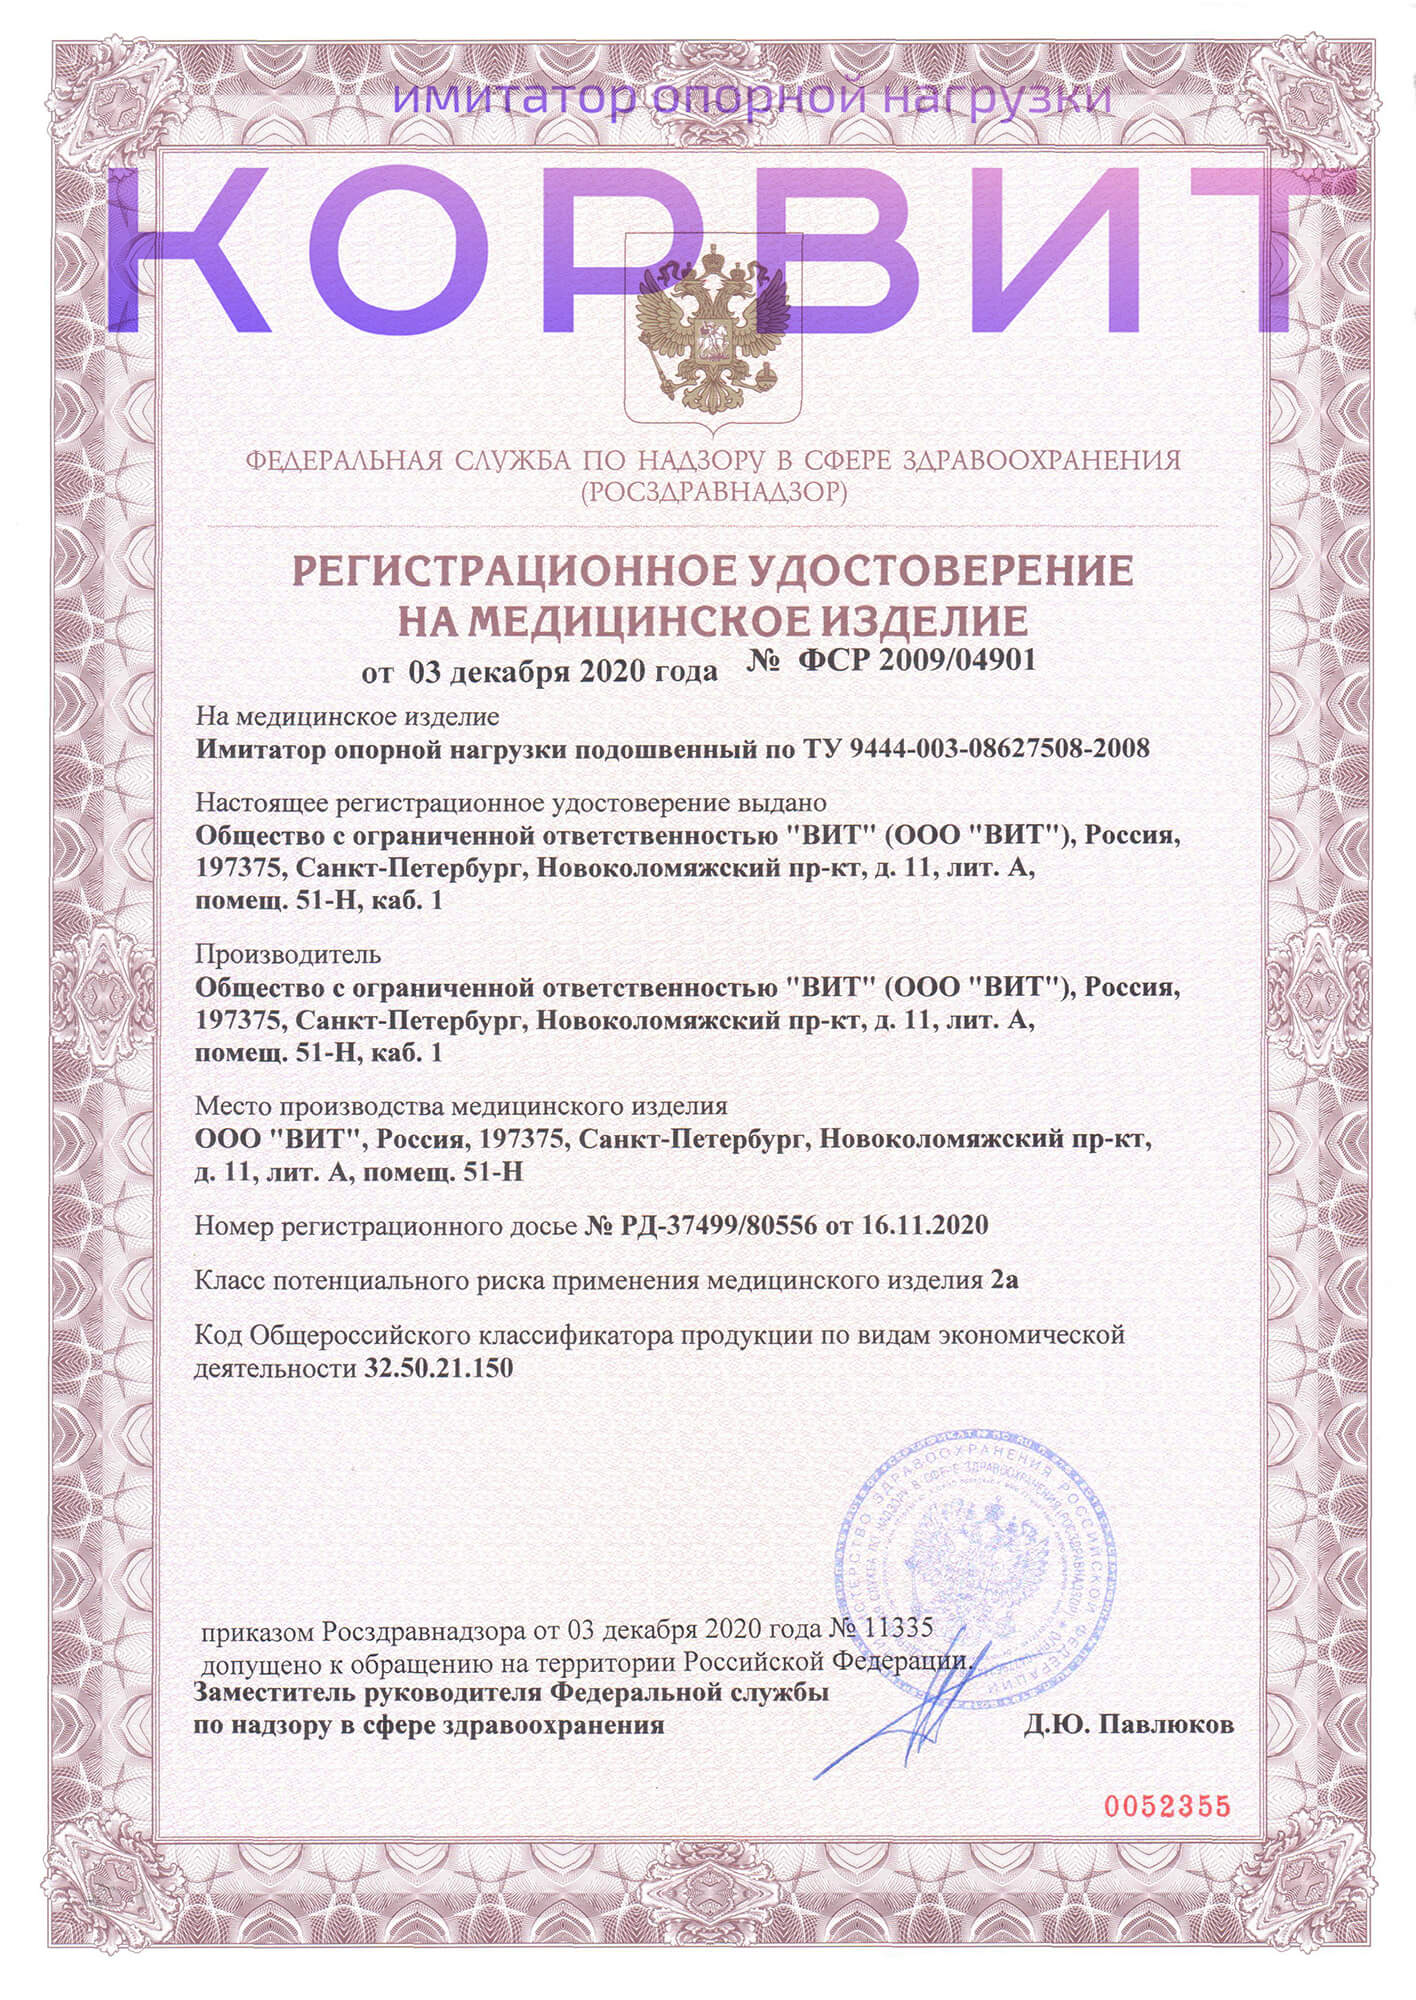 Corvit License